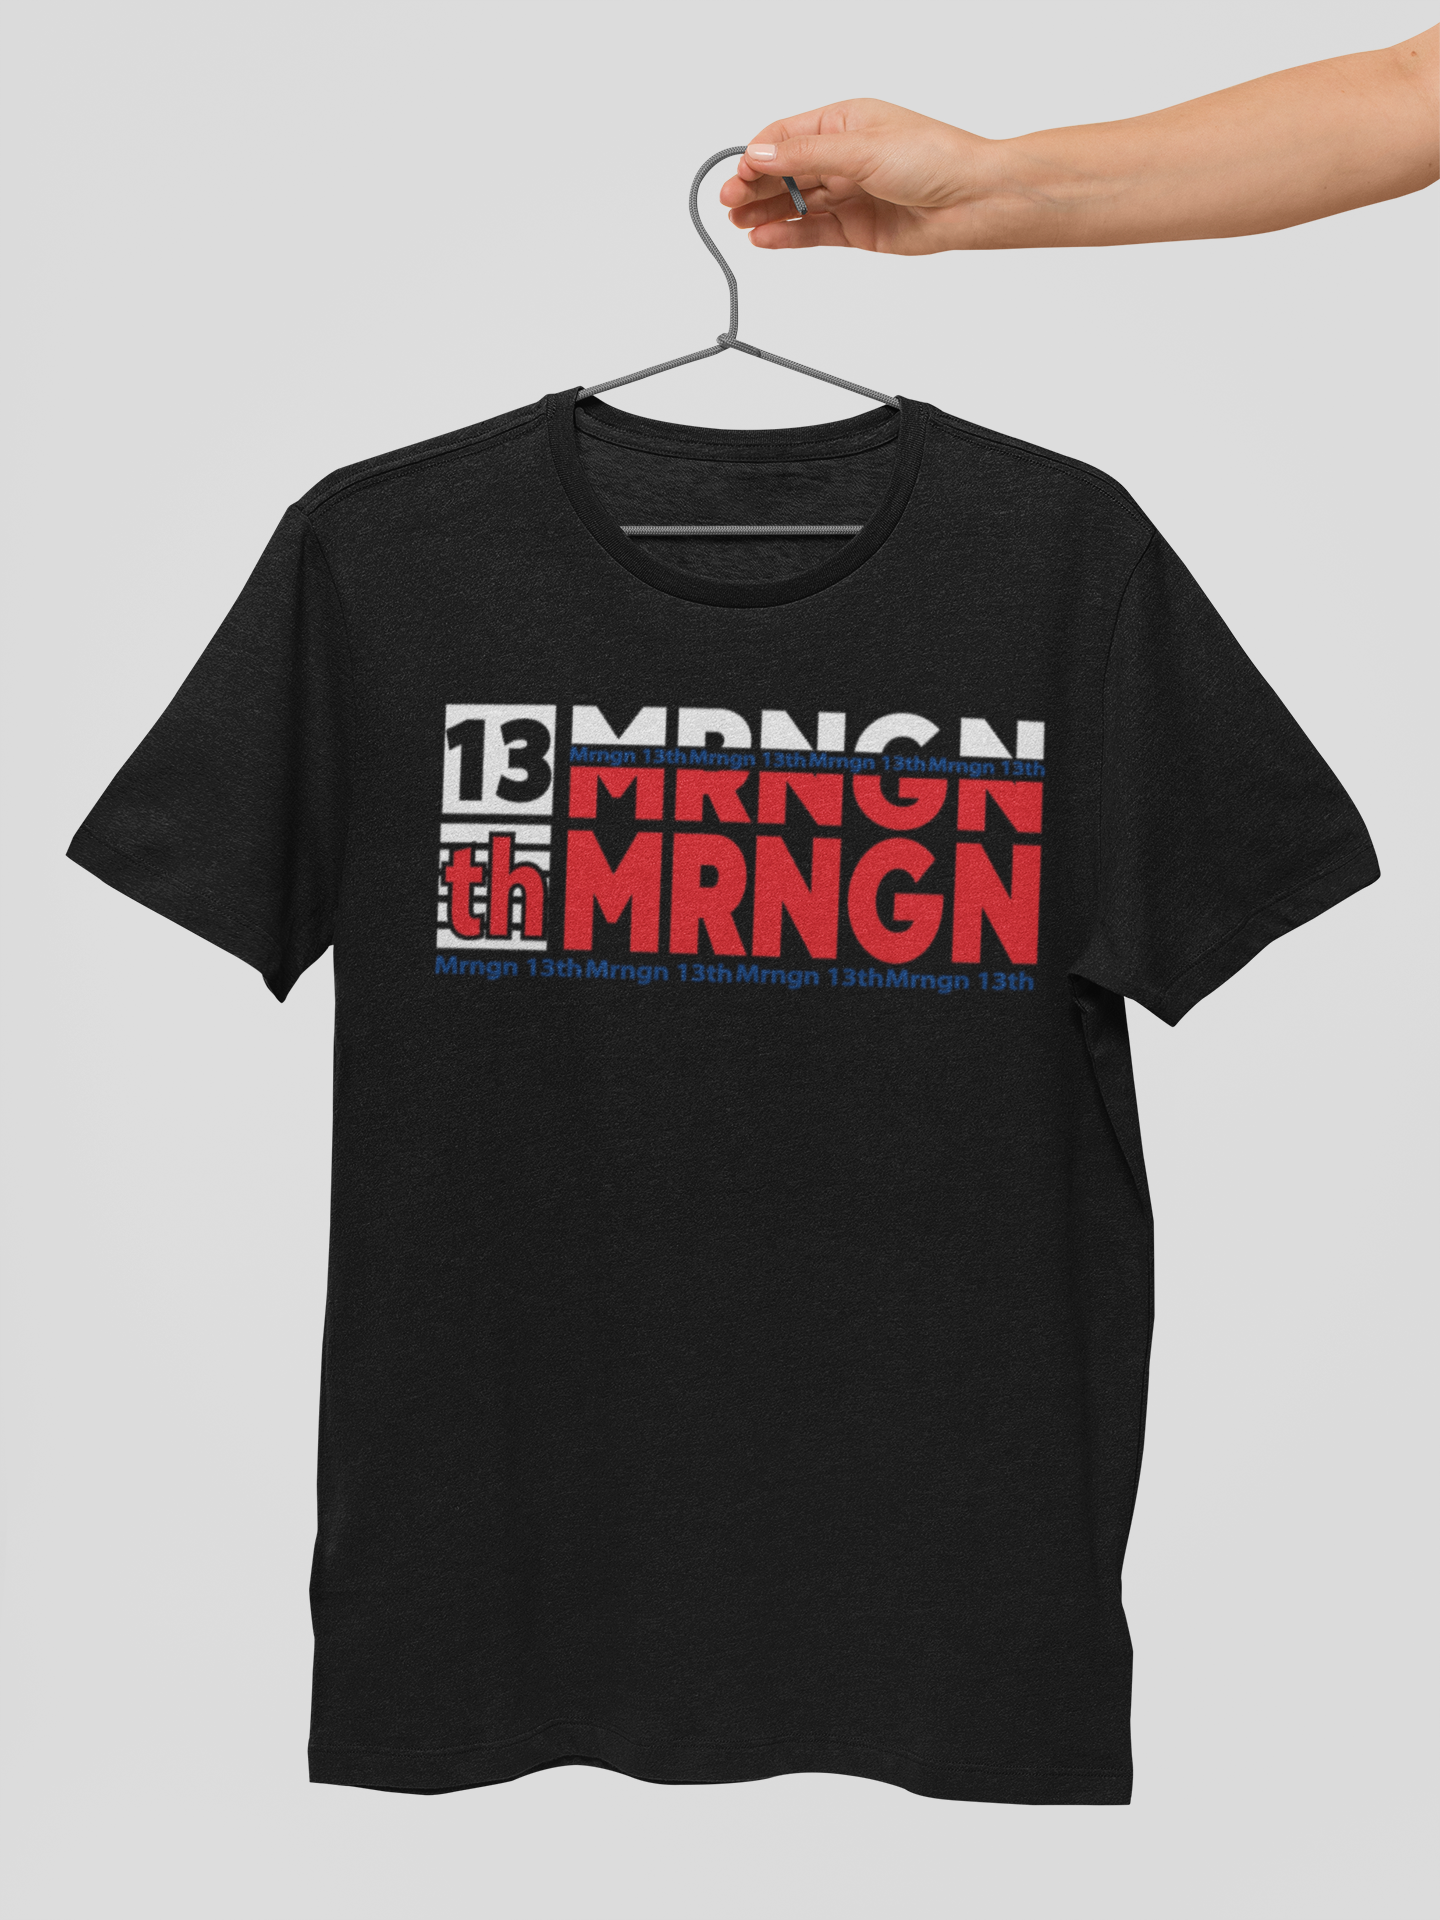 MRNGN 13th stacked T-Shirt || MRNGN CLOTHING